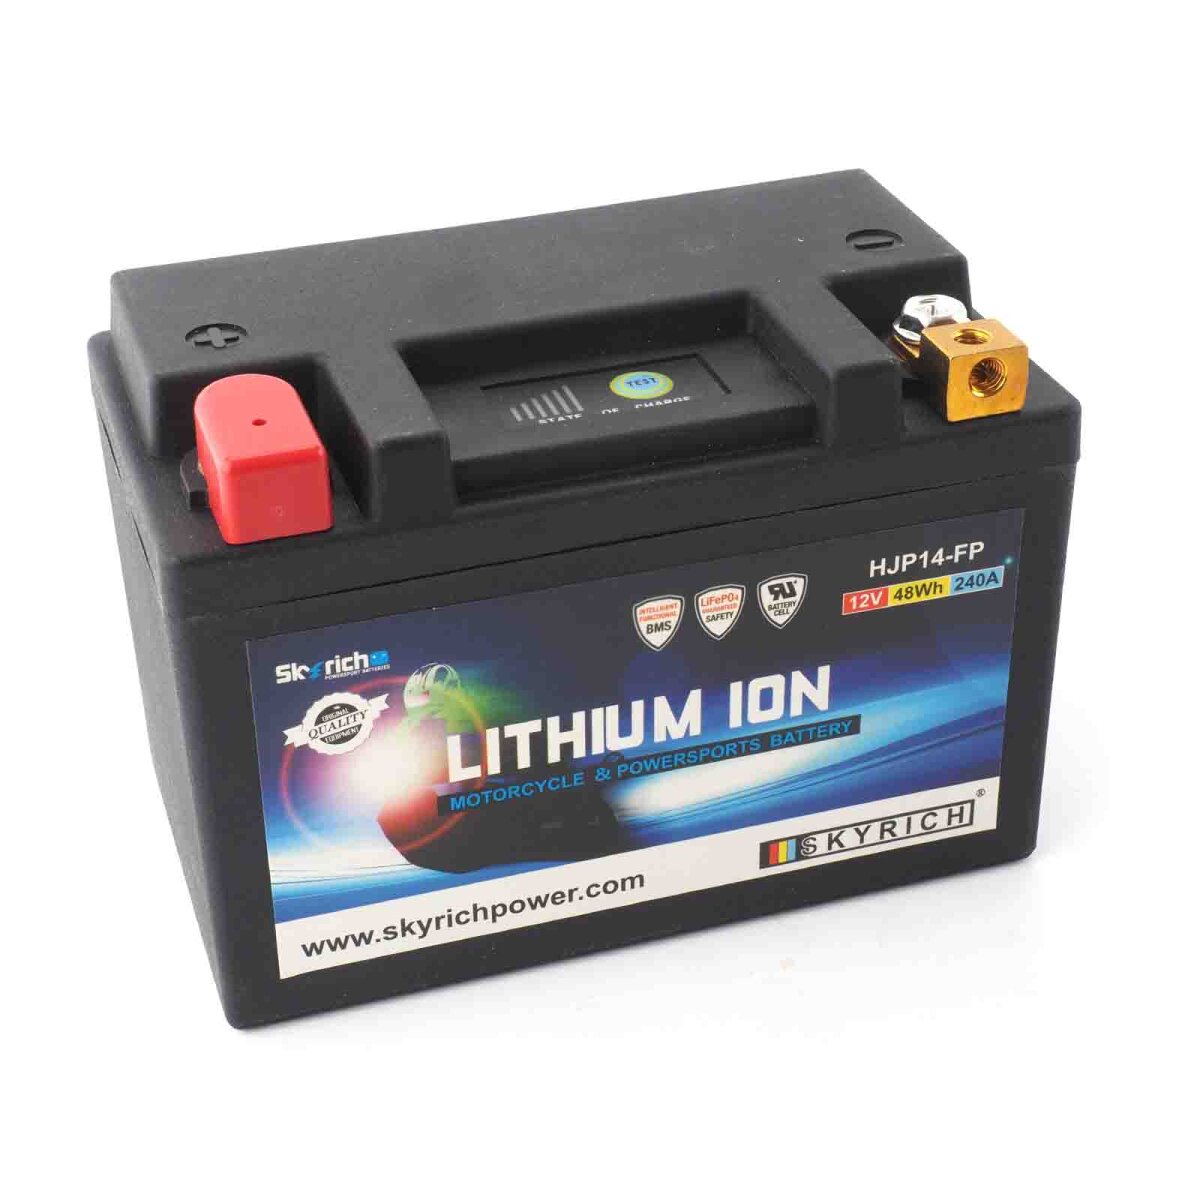 Batterie Ladegerät für BMW K 1200 R/RS/S Lithium/Blei 3,6A IO5